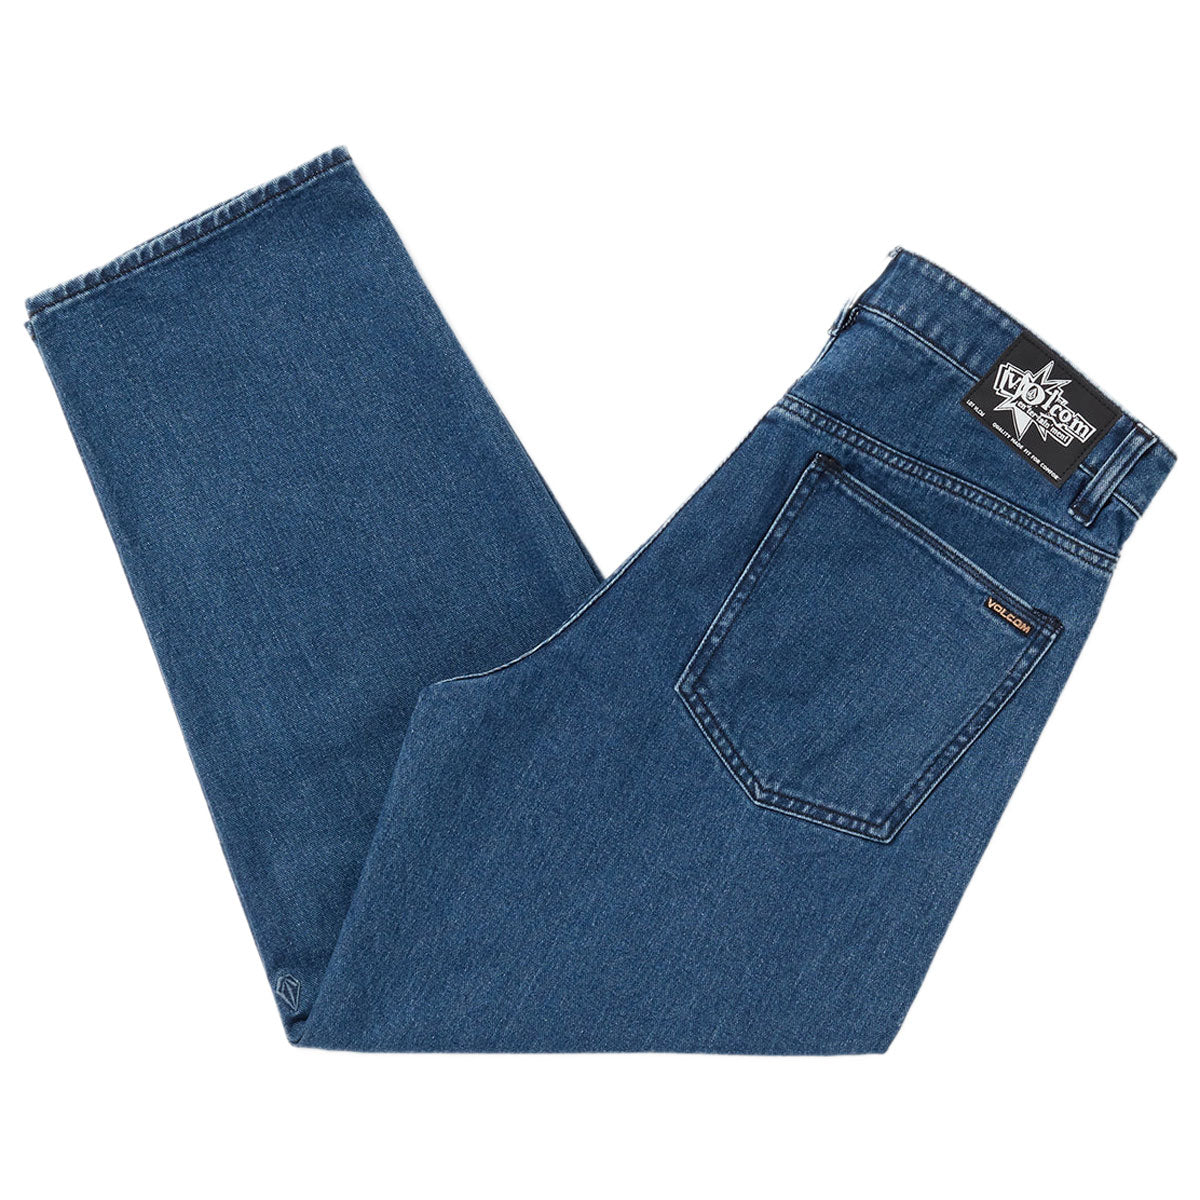 Volcom V Ent Noa Deane Denim Jeans - Laguna Blue image 3